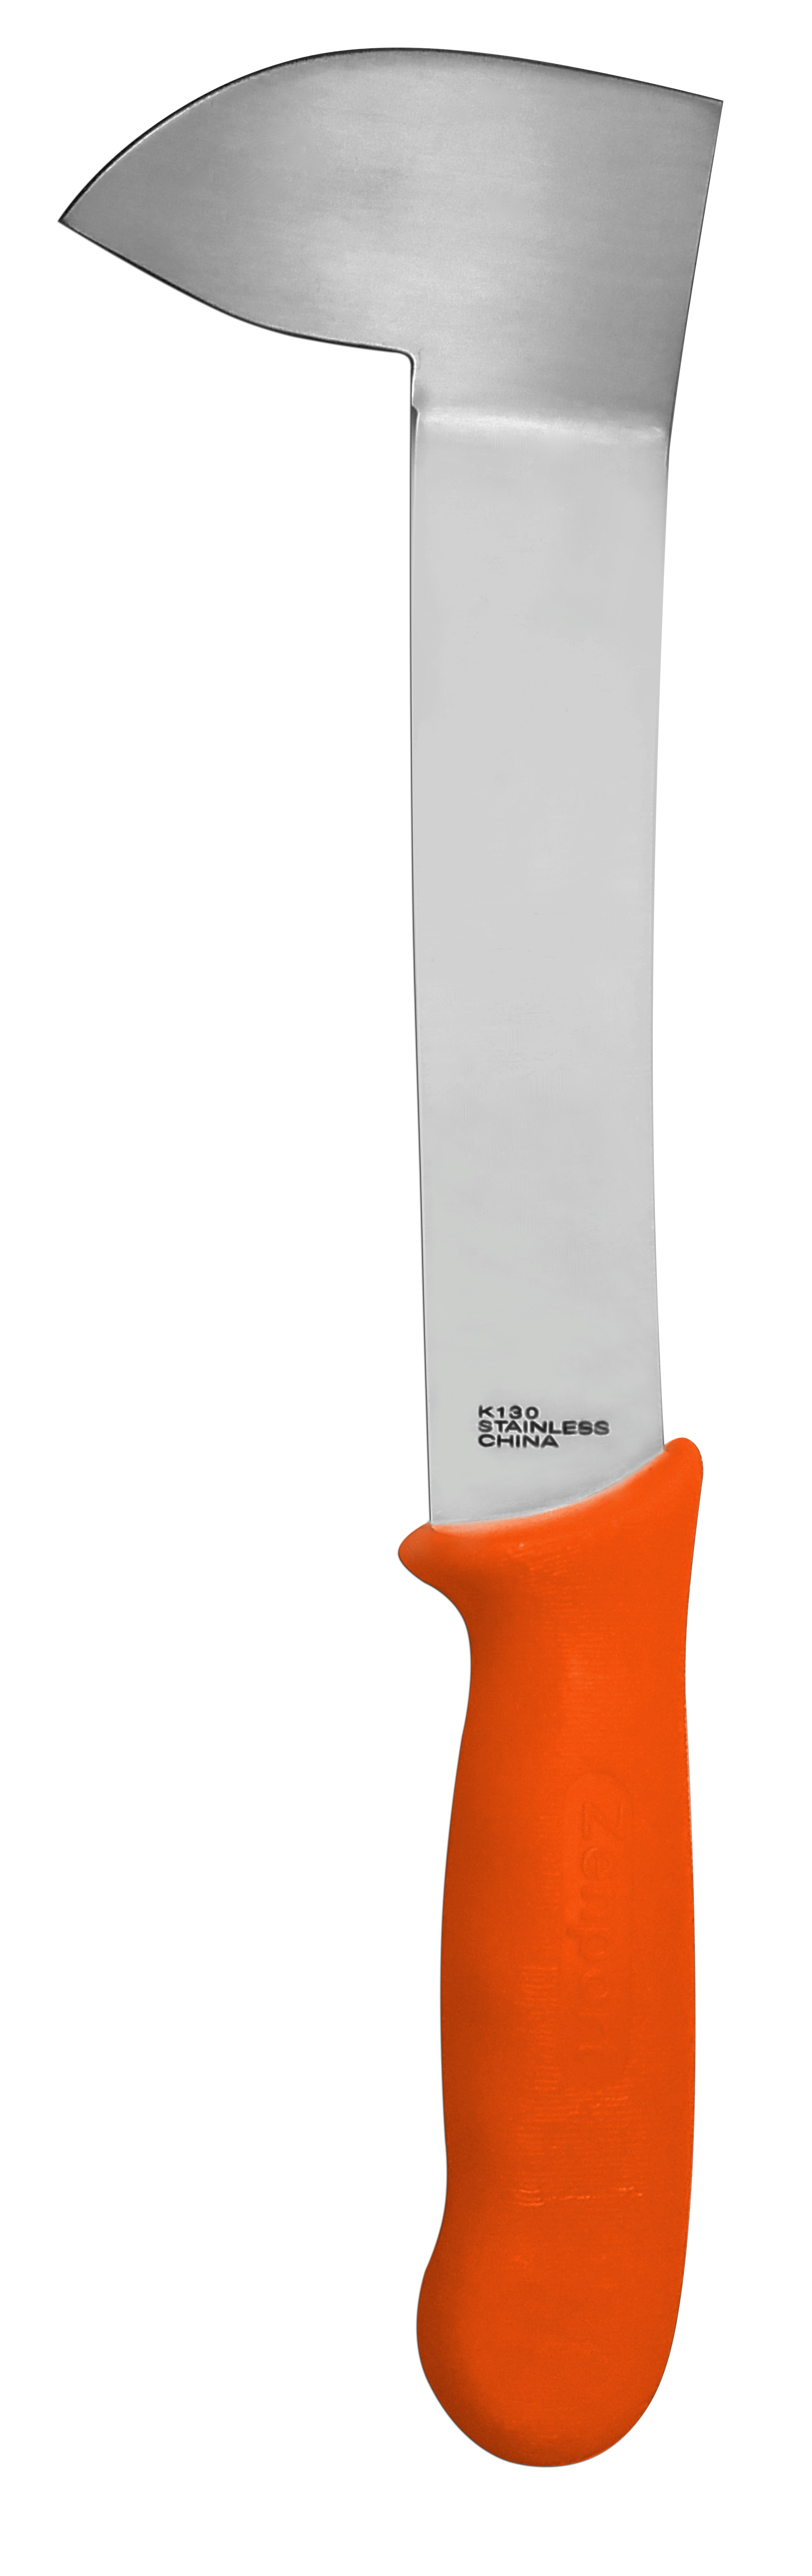 Zenport Celery Knife K130 Celery Harvest Knife, Stainless Steel 8.5-Inch Blade, Orange Plastic Handle - Click Image to Close